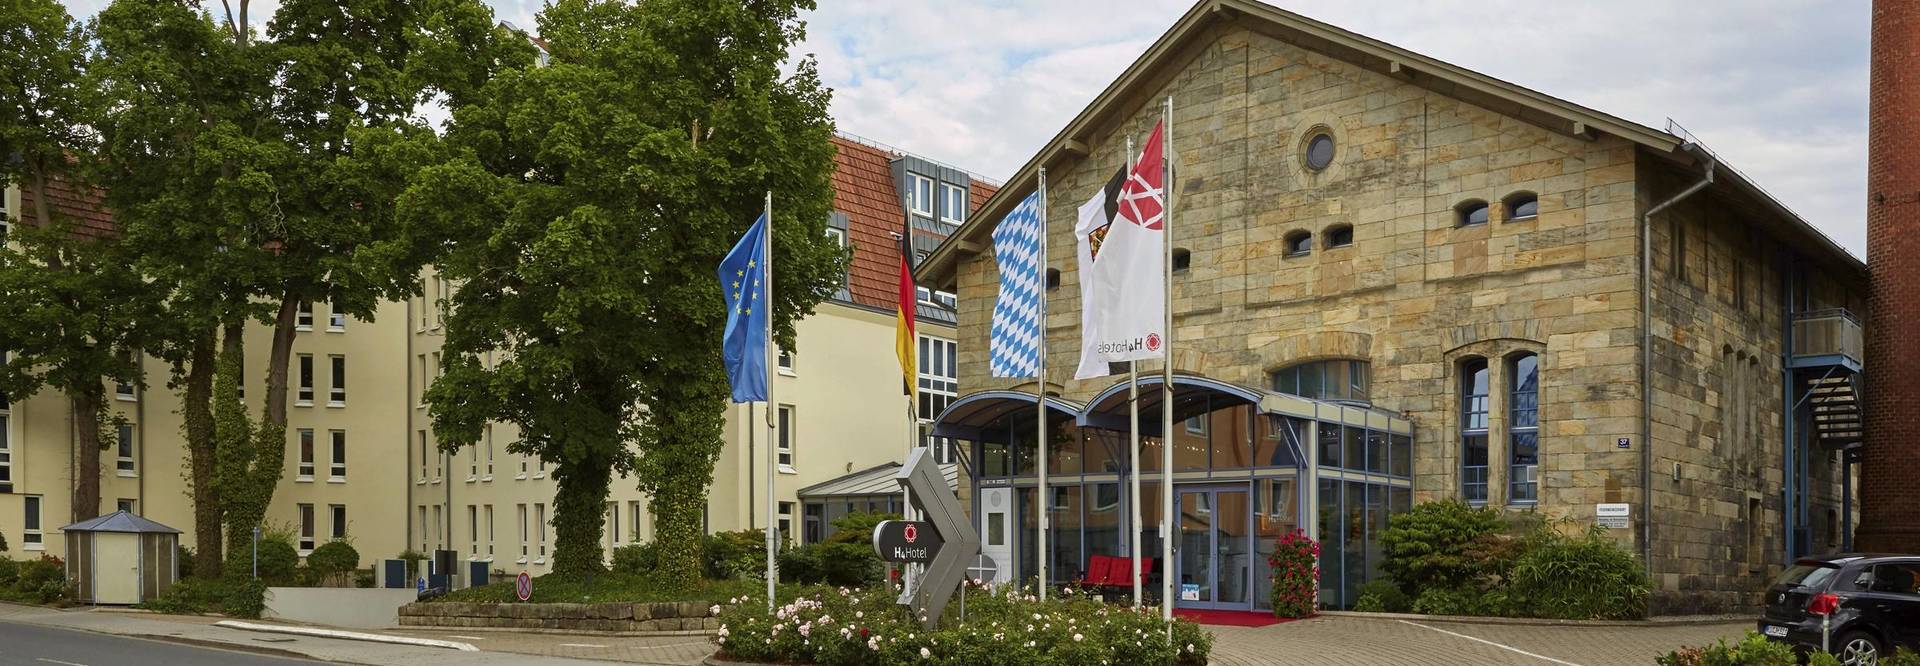 Recensione: H4 Hotel Residenzschloss Bayreuth